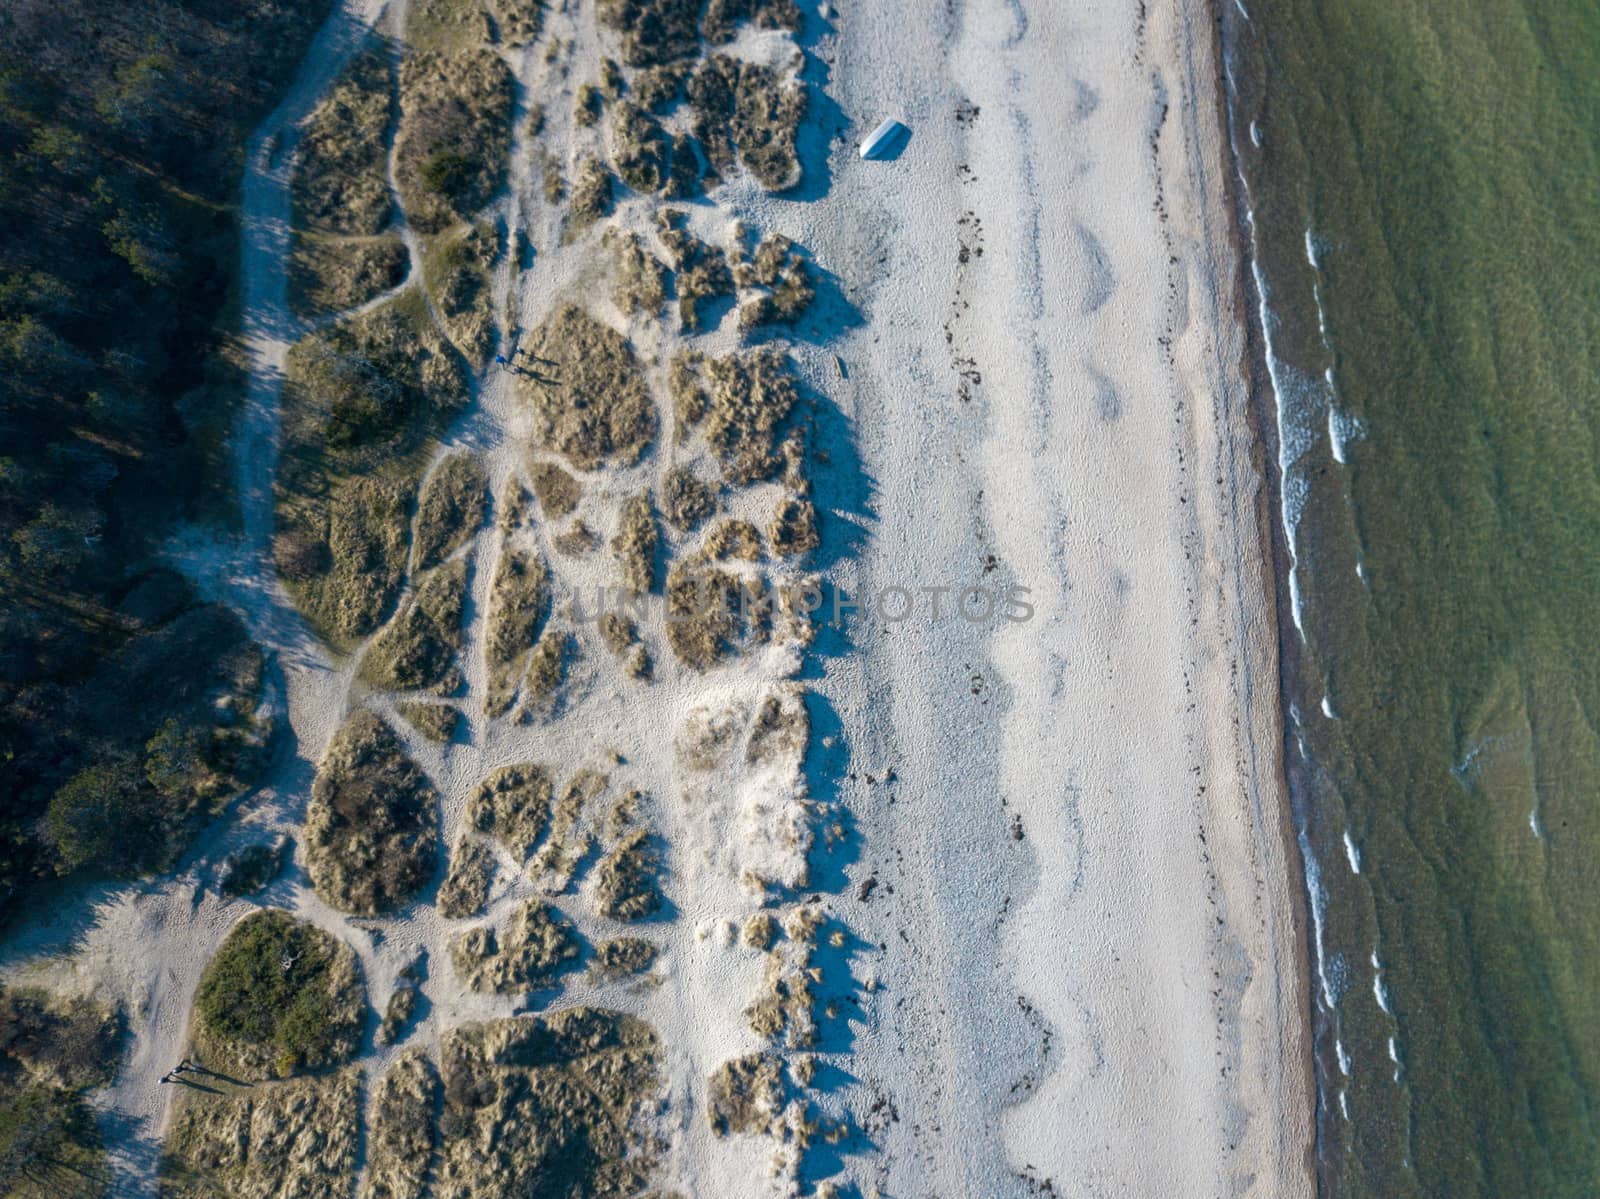 Aerial view of Tisvildeleje Beach, Denmark by oliverfoerstner